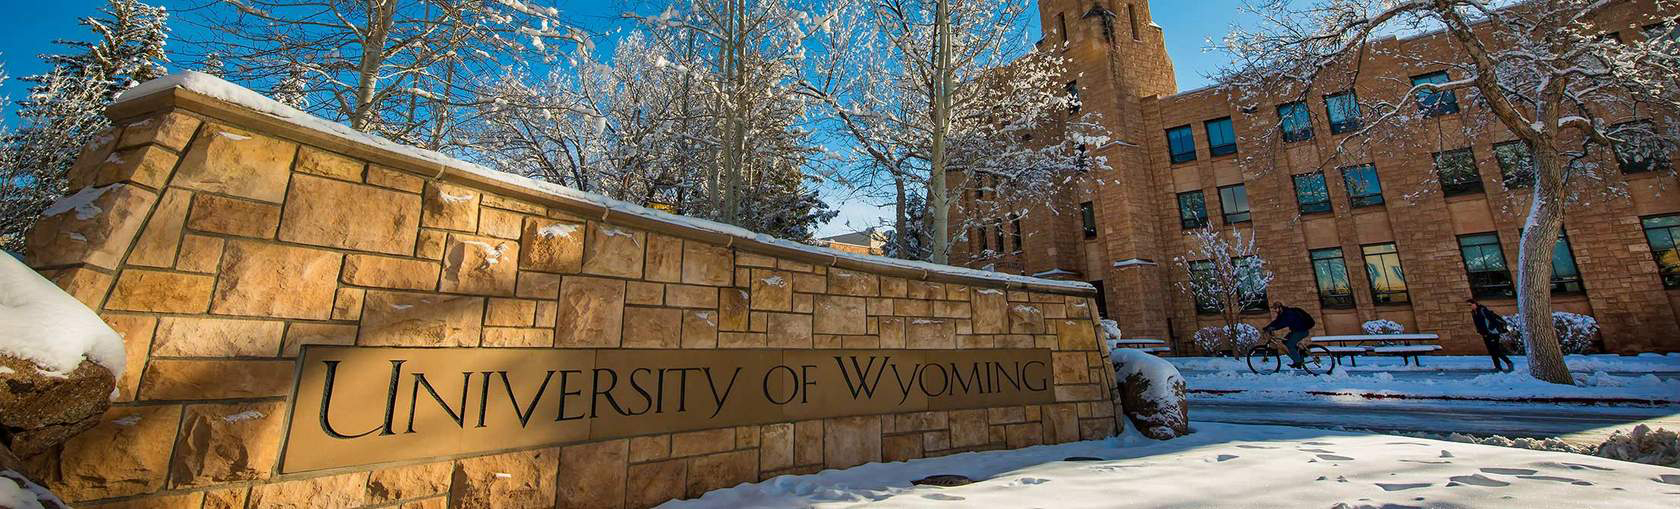 brick university of Wyoming sign